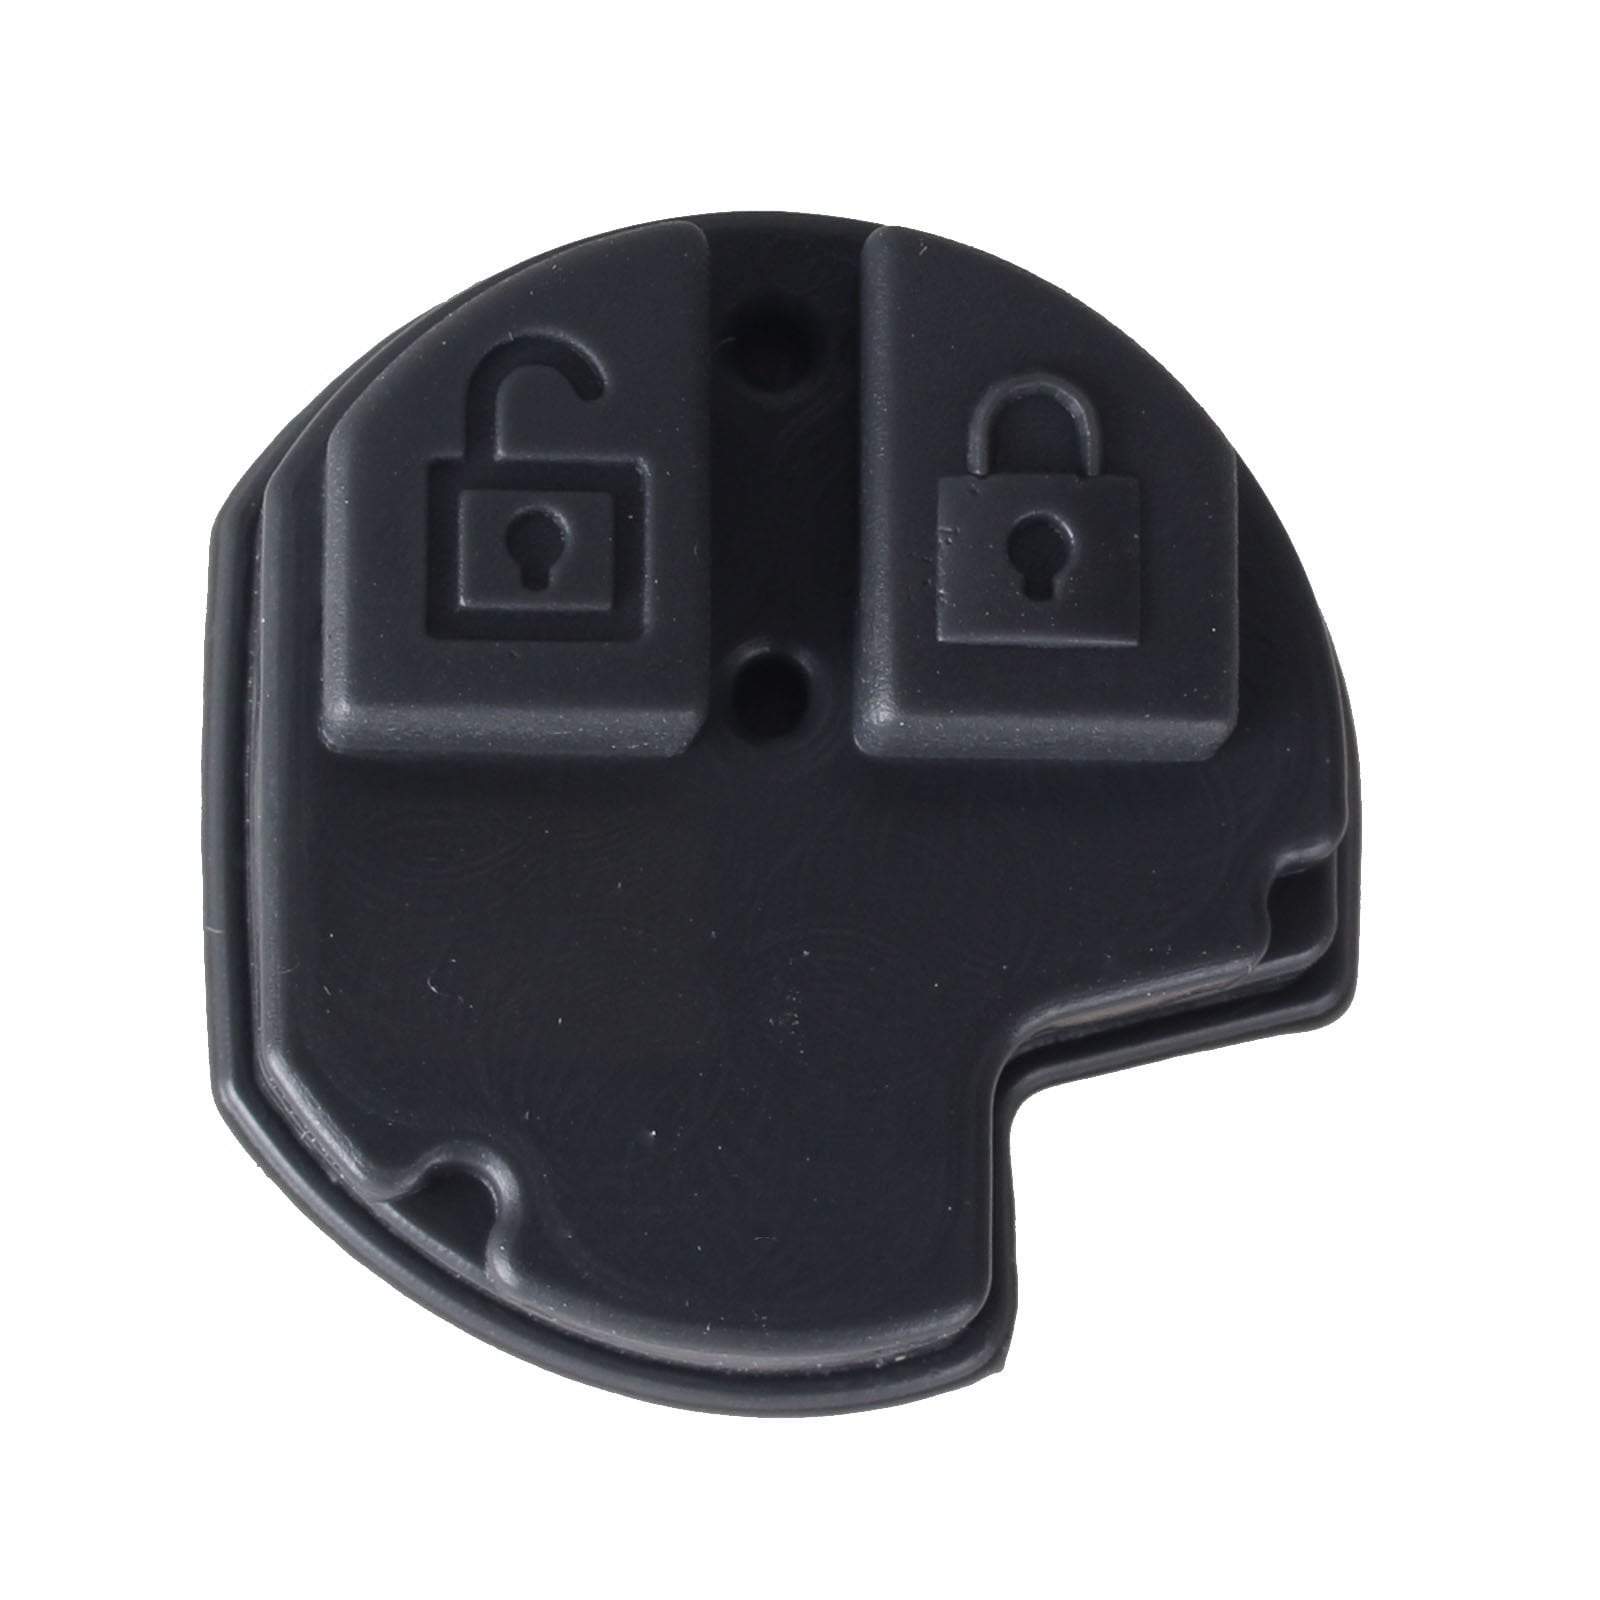 Fekete színű Suzuki kulcs gombsor.